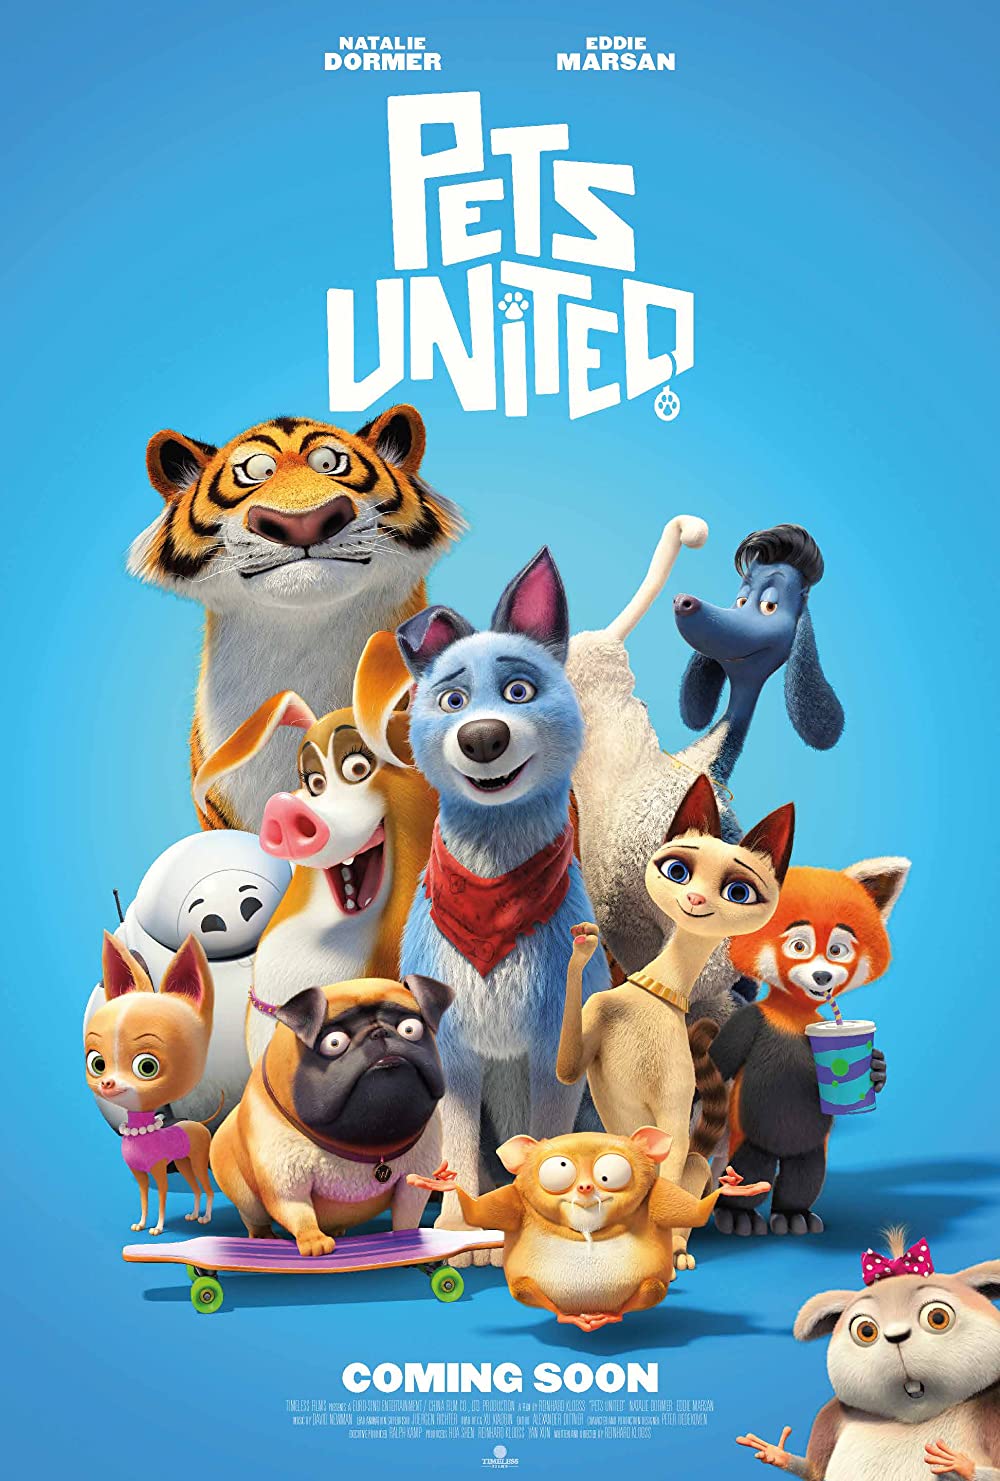 Filmbeschreibung zu Pets United